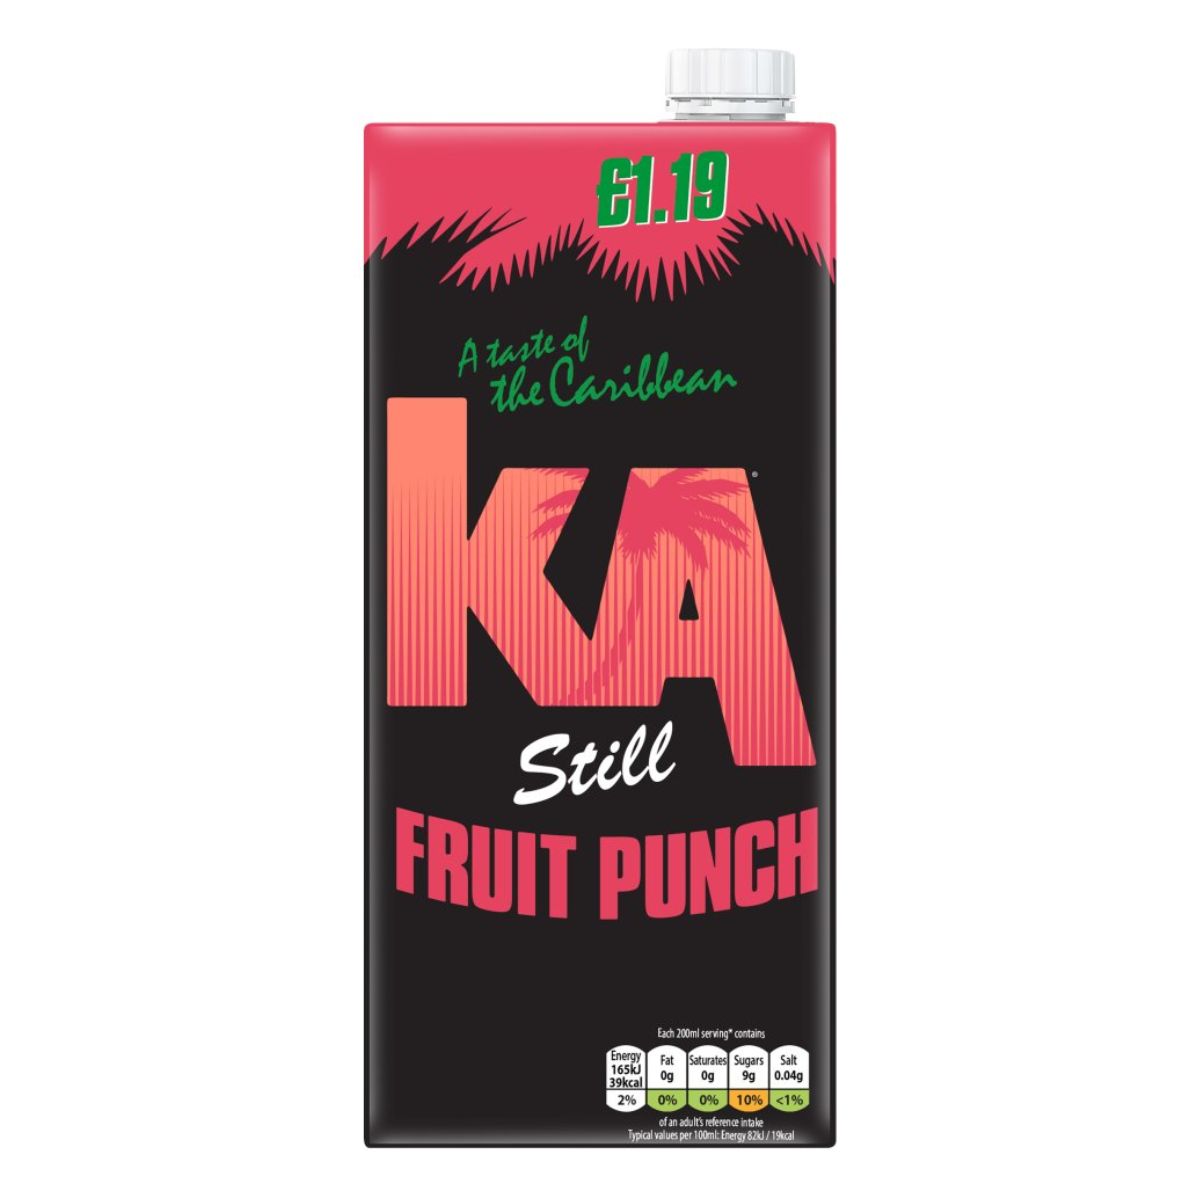 A bottle of KA - Still Fruit Punch - 1L.